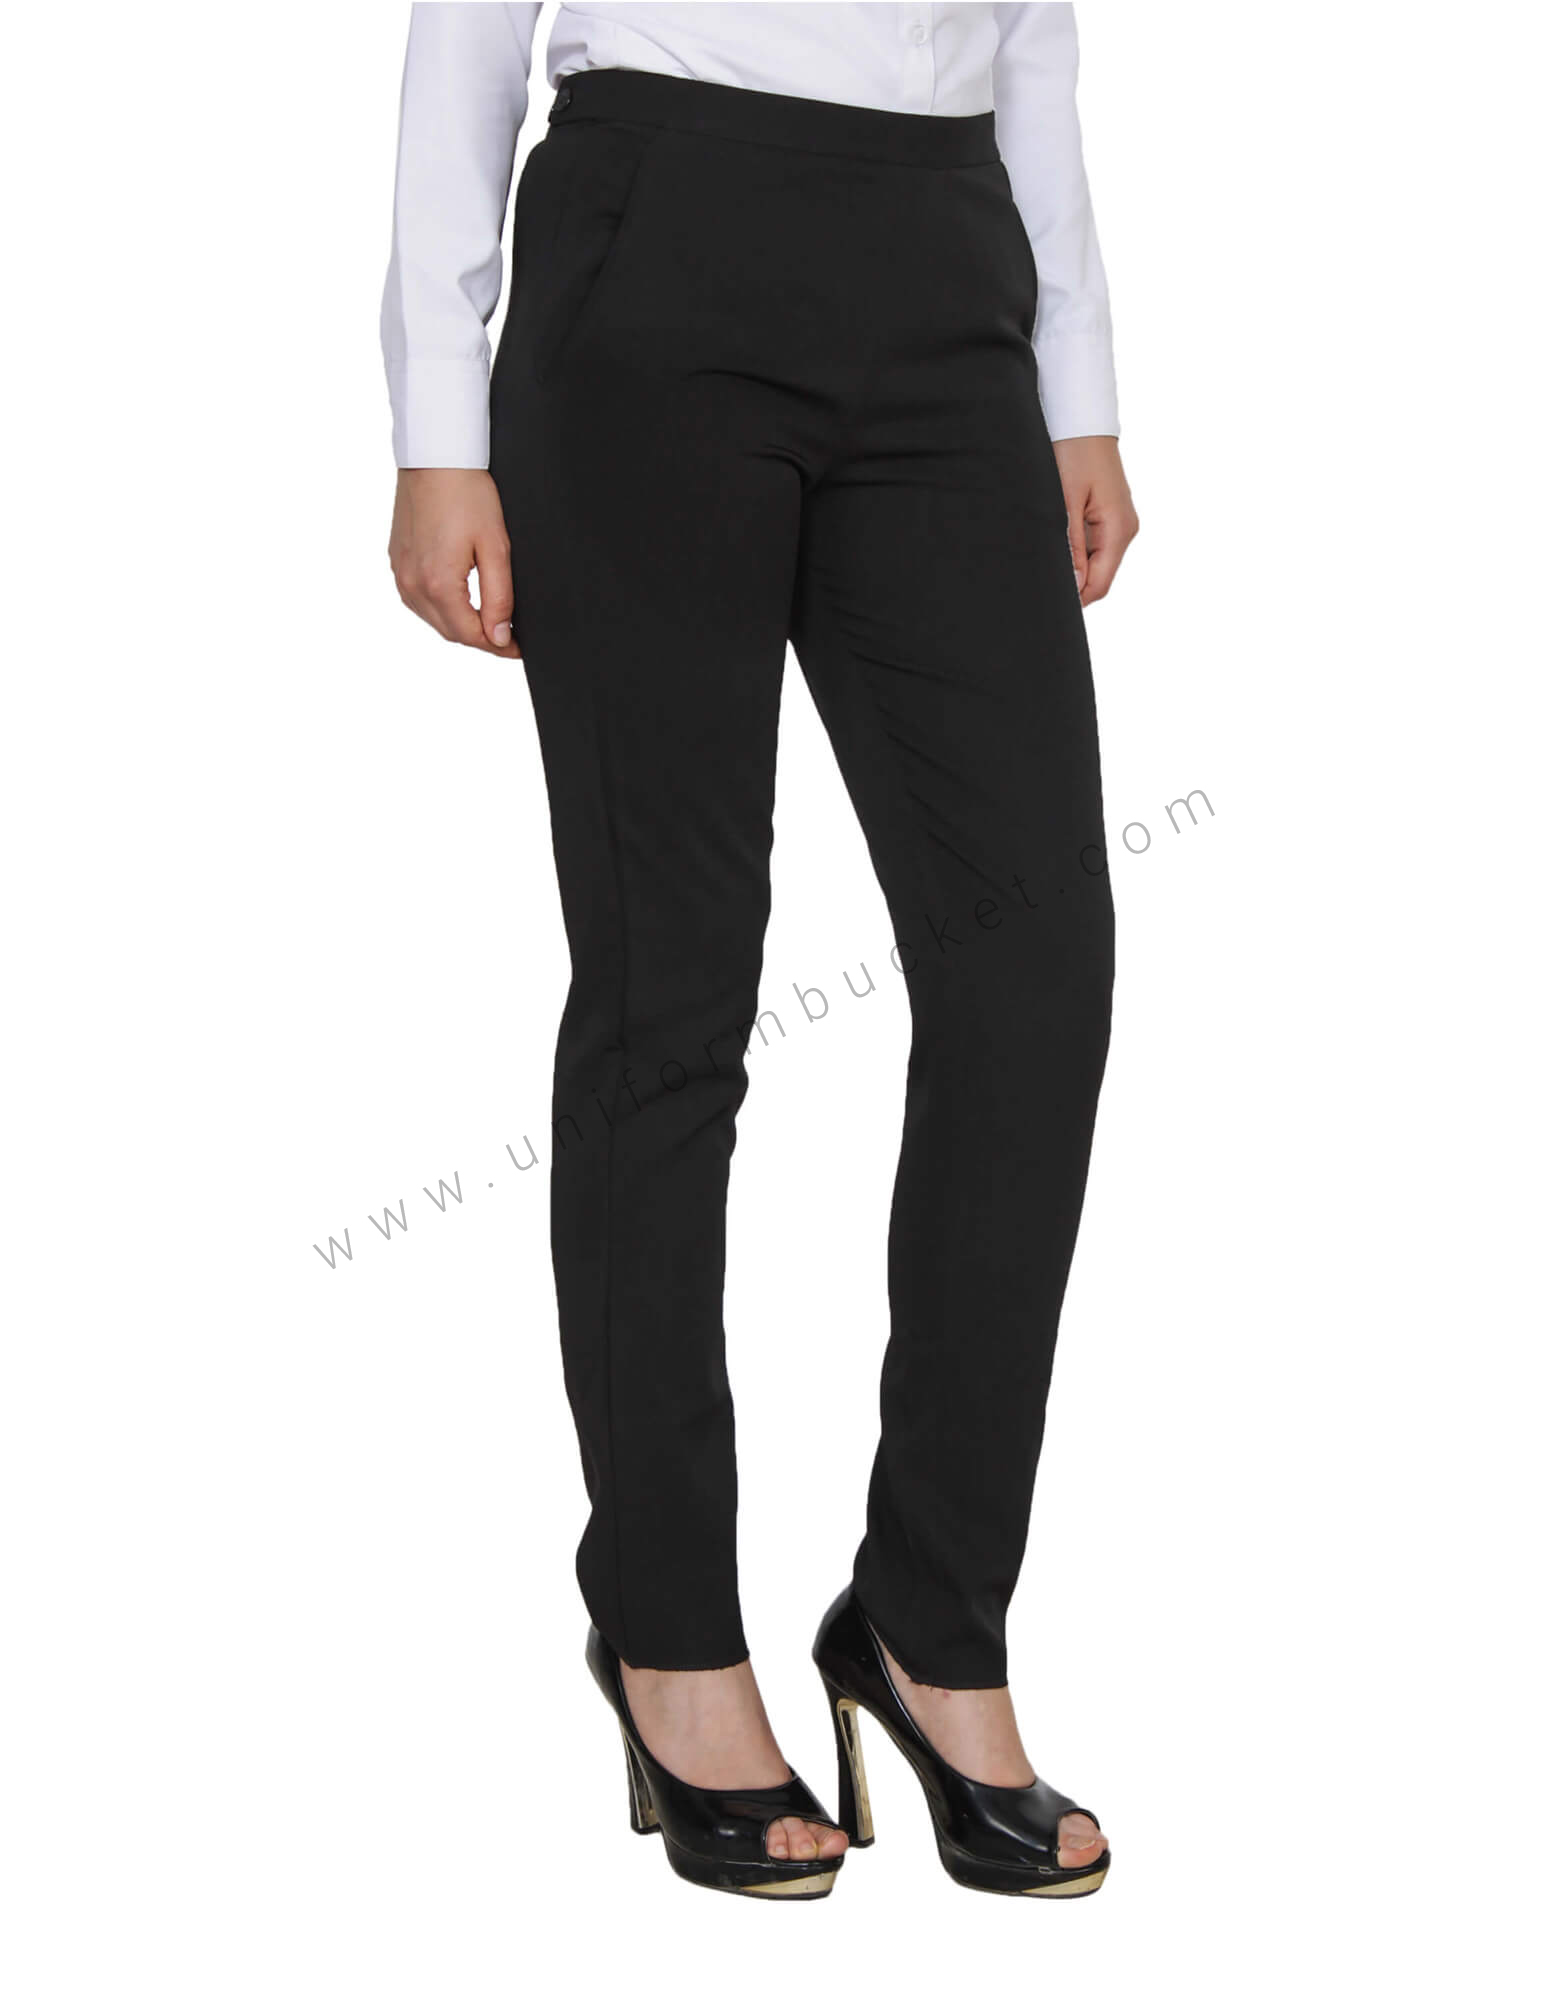 Ladies Roma Silk Formal Pants at Rs 275/piece | Loni | ID: 21656370162